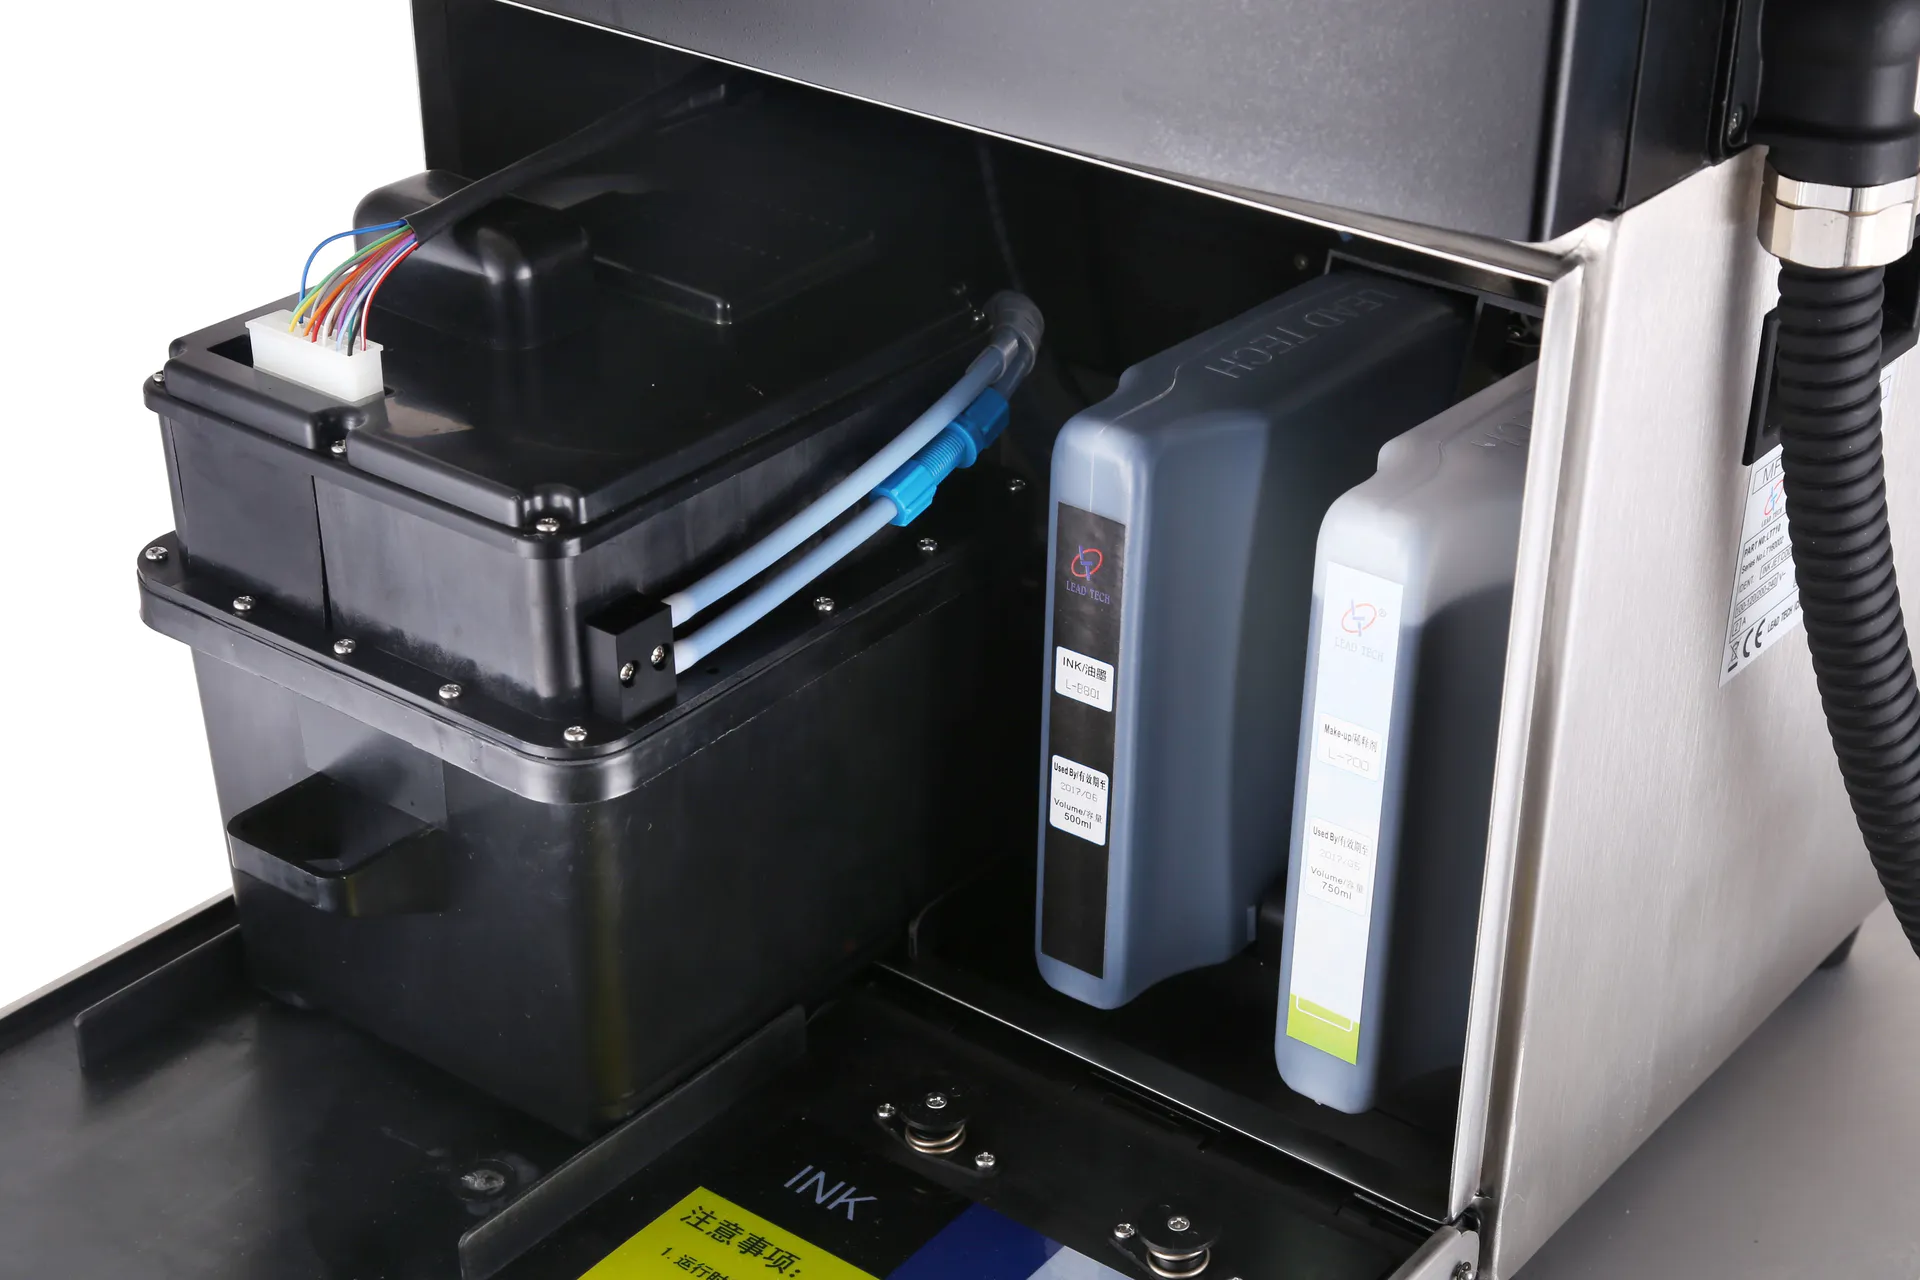 Lead Tech Lt710 Reverse Printing Continuous Cij Inkjet Printer